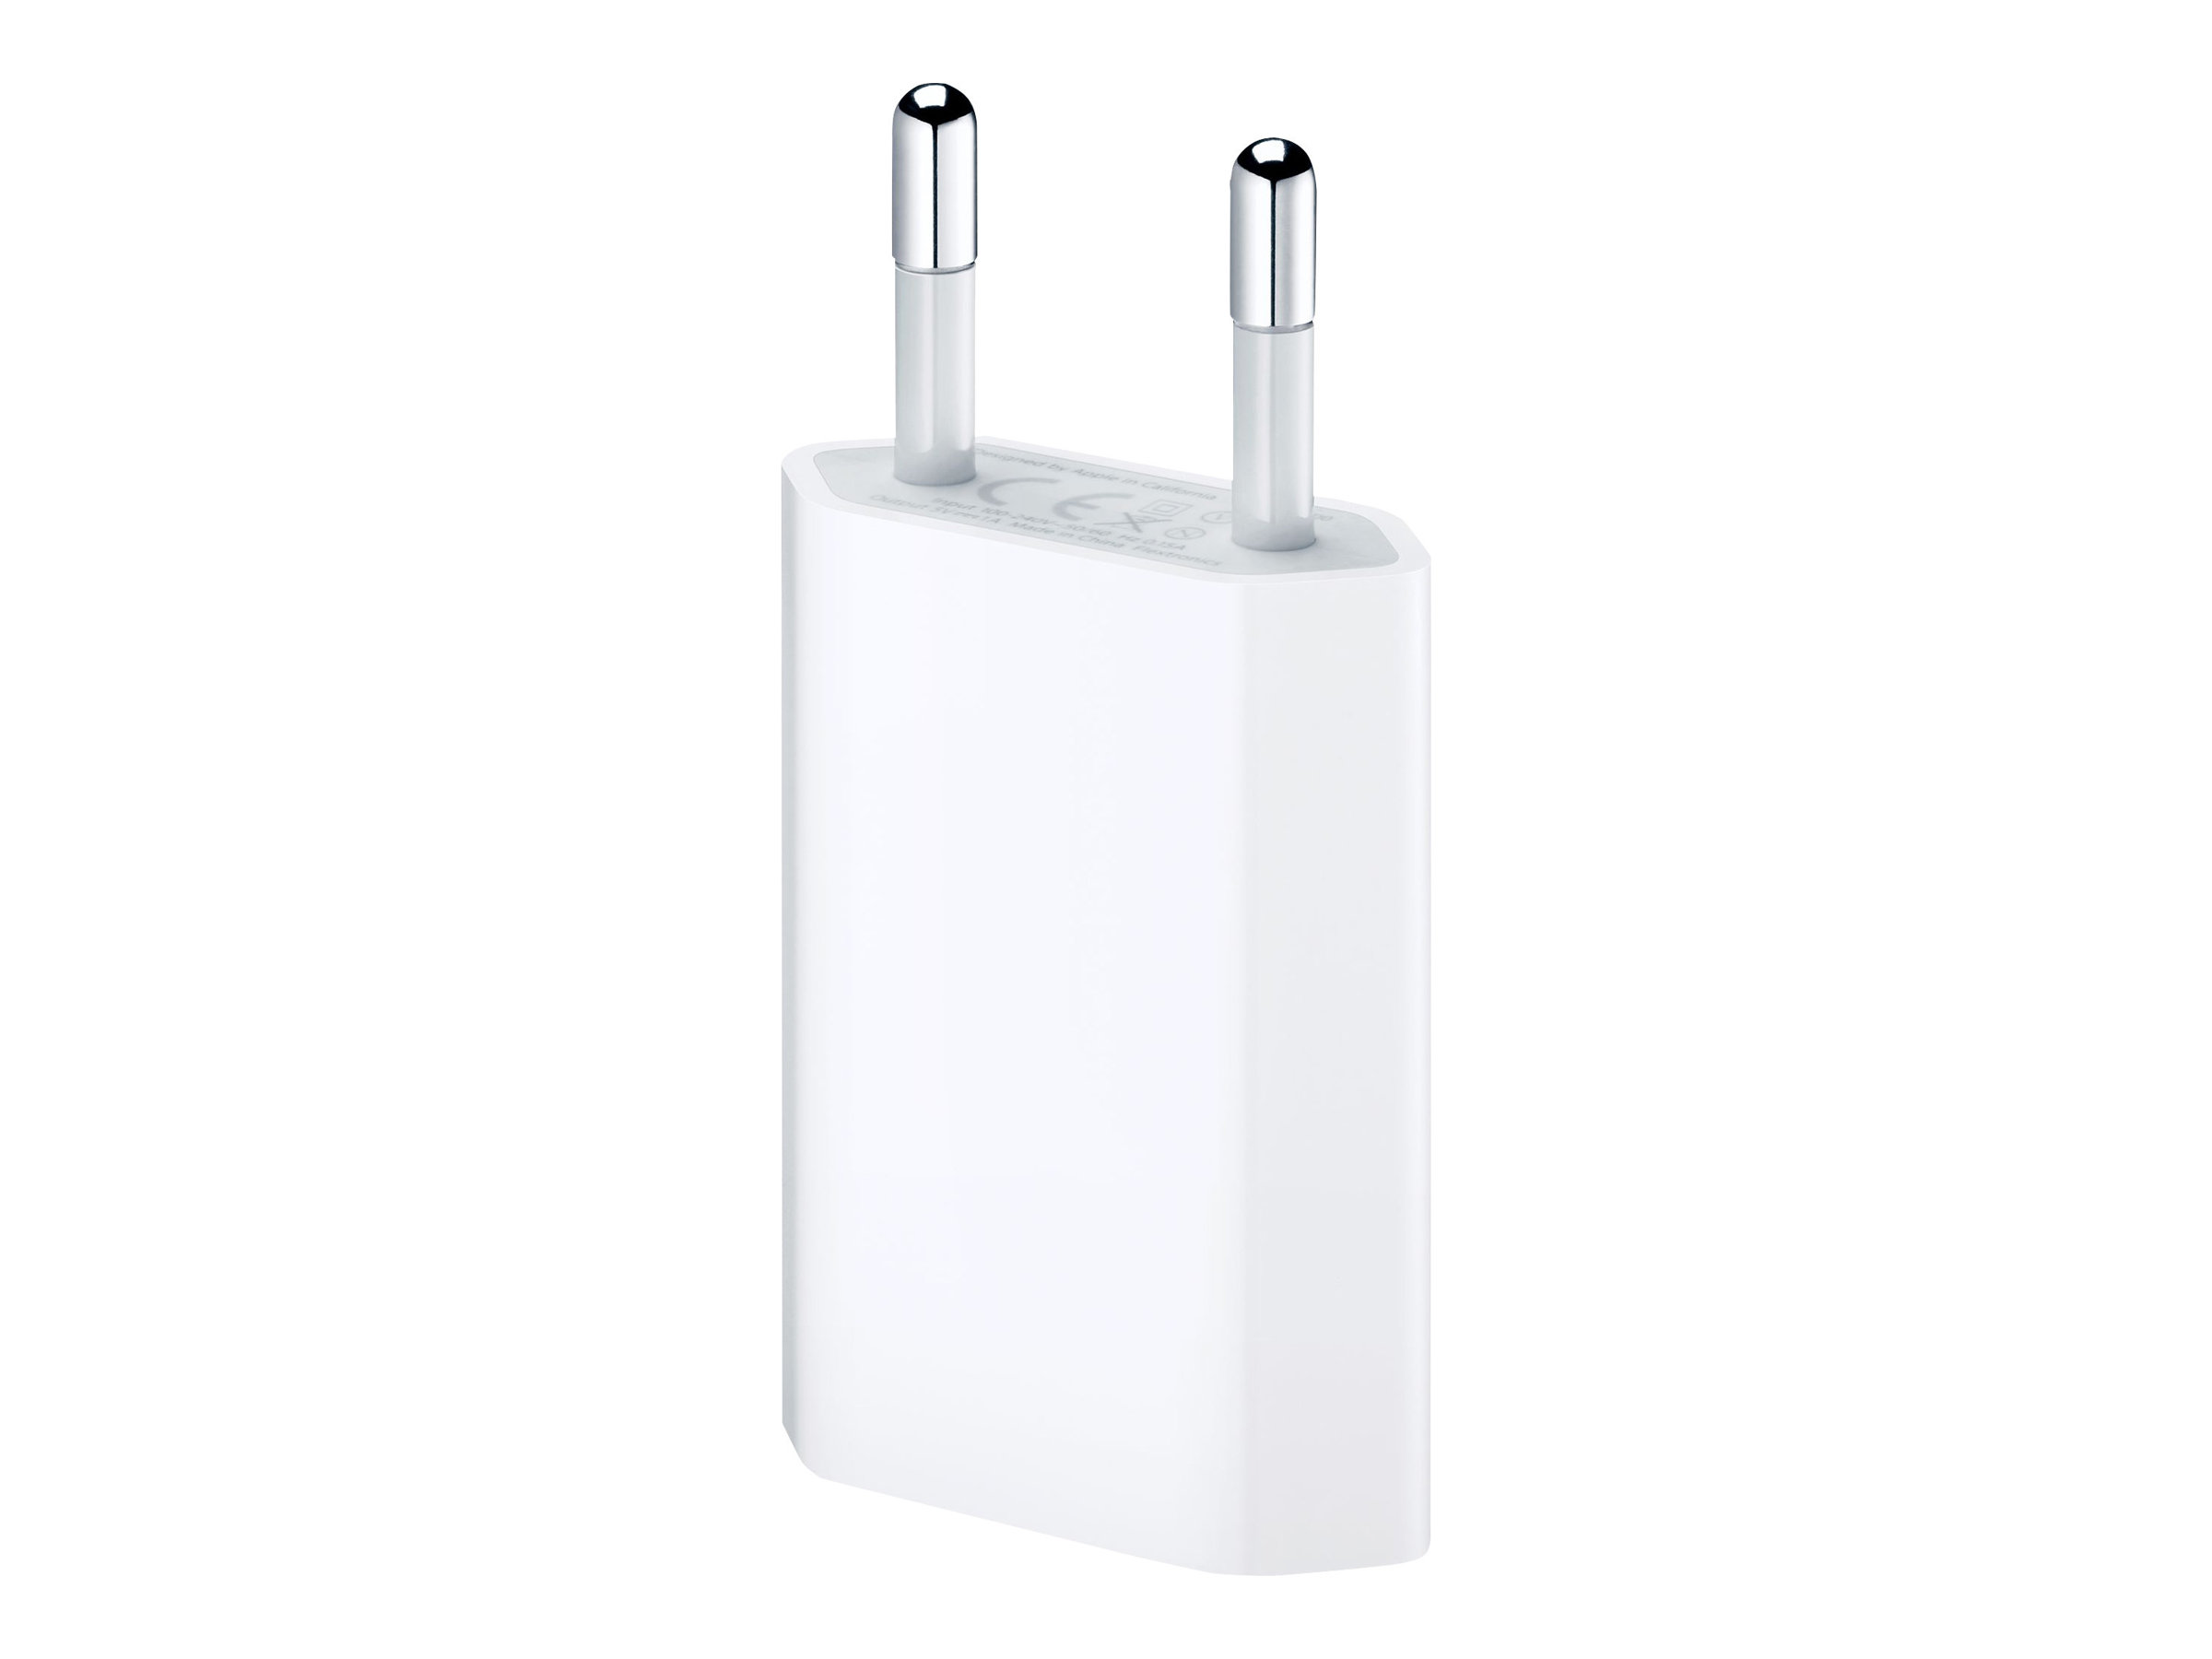 område Belyse gyldige Apple 5W USB Power Adapter | eu.shi.com